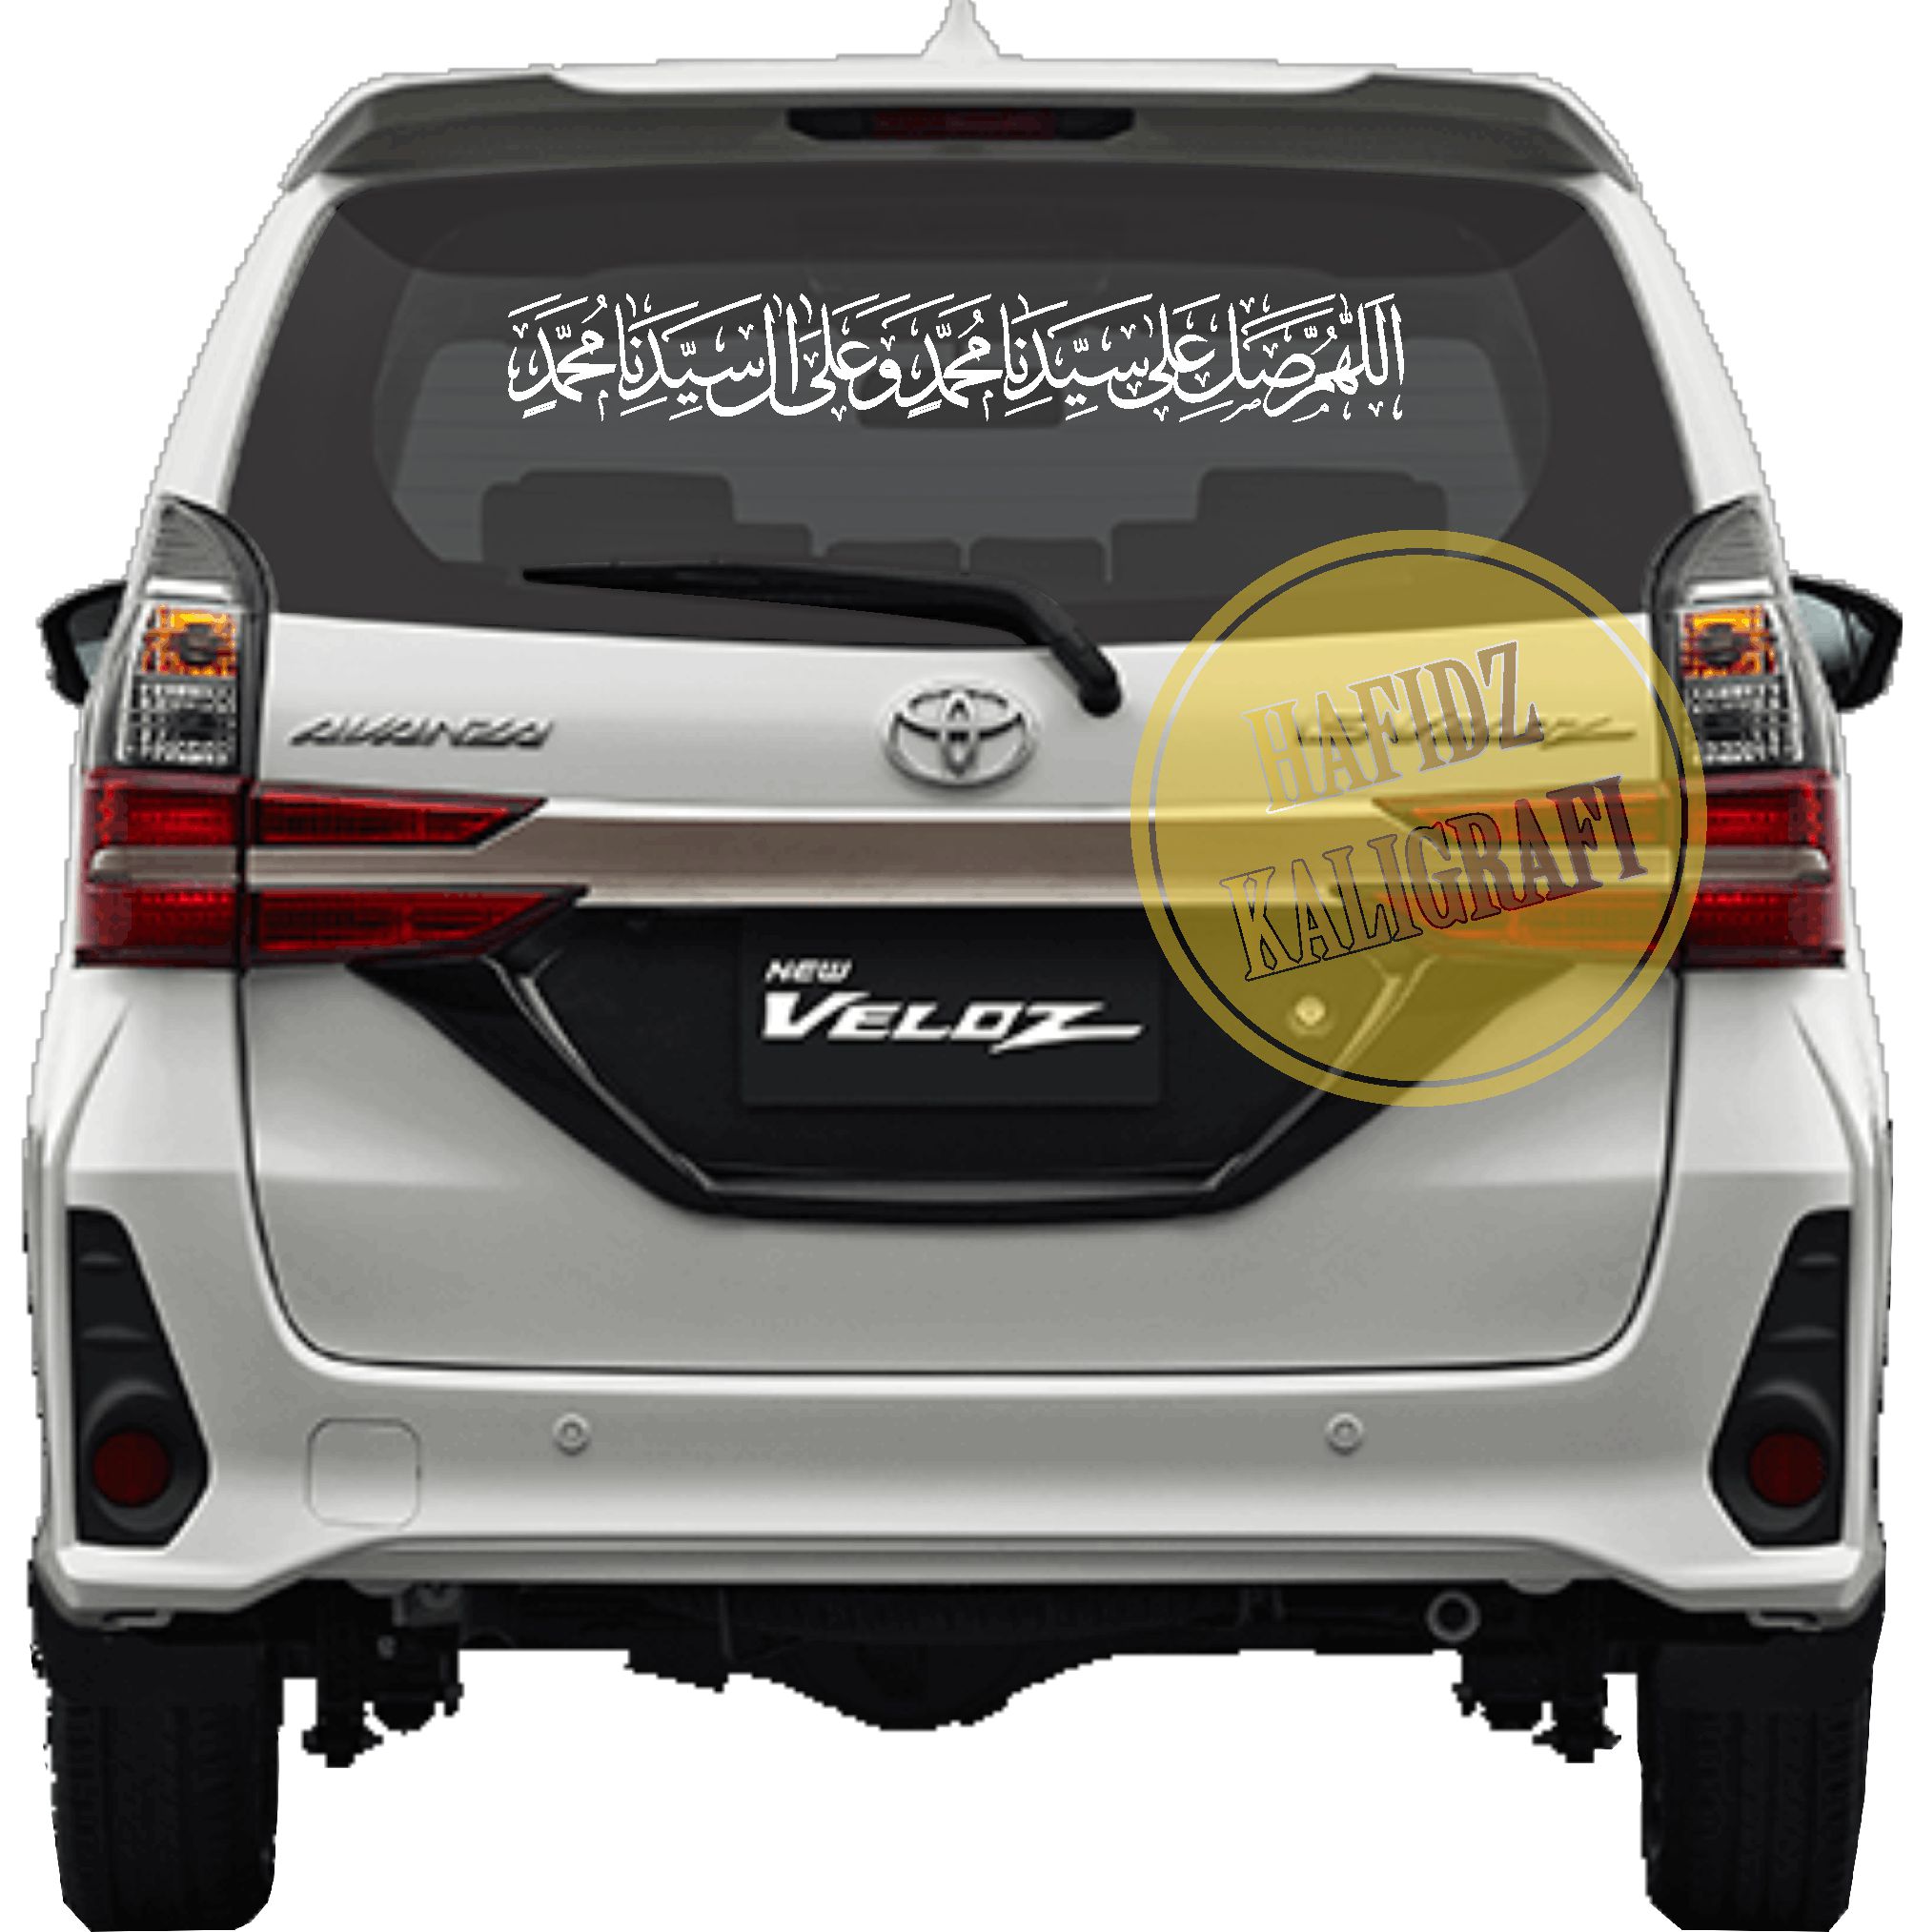 Stiker Sticker Kaligrafi Mobil Sholawat Nabi Versi Lengkap Bonus